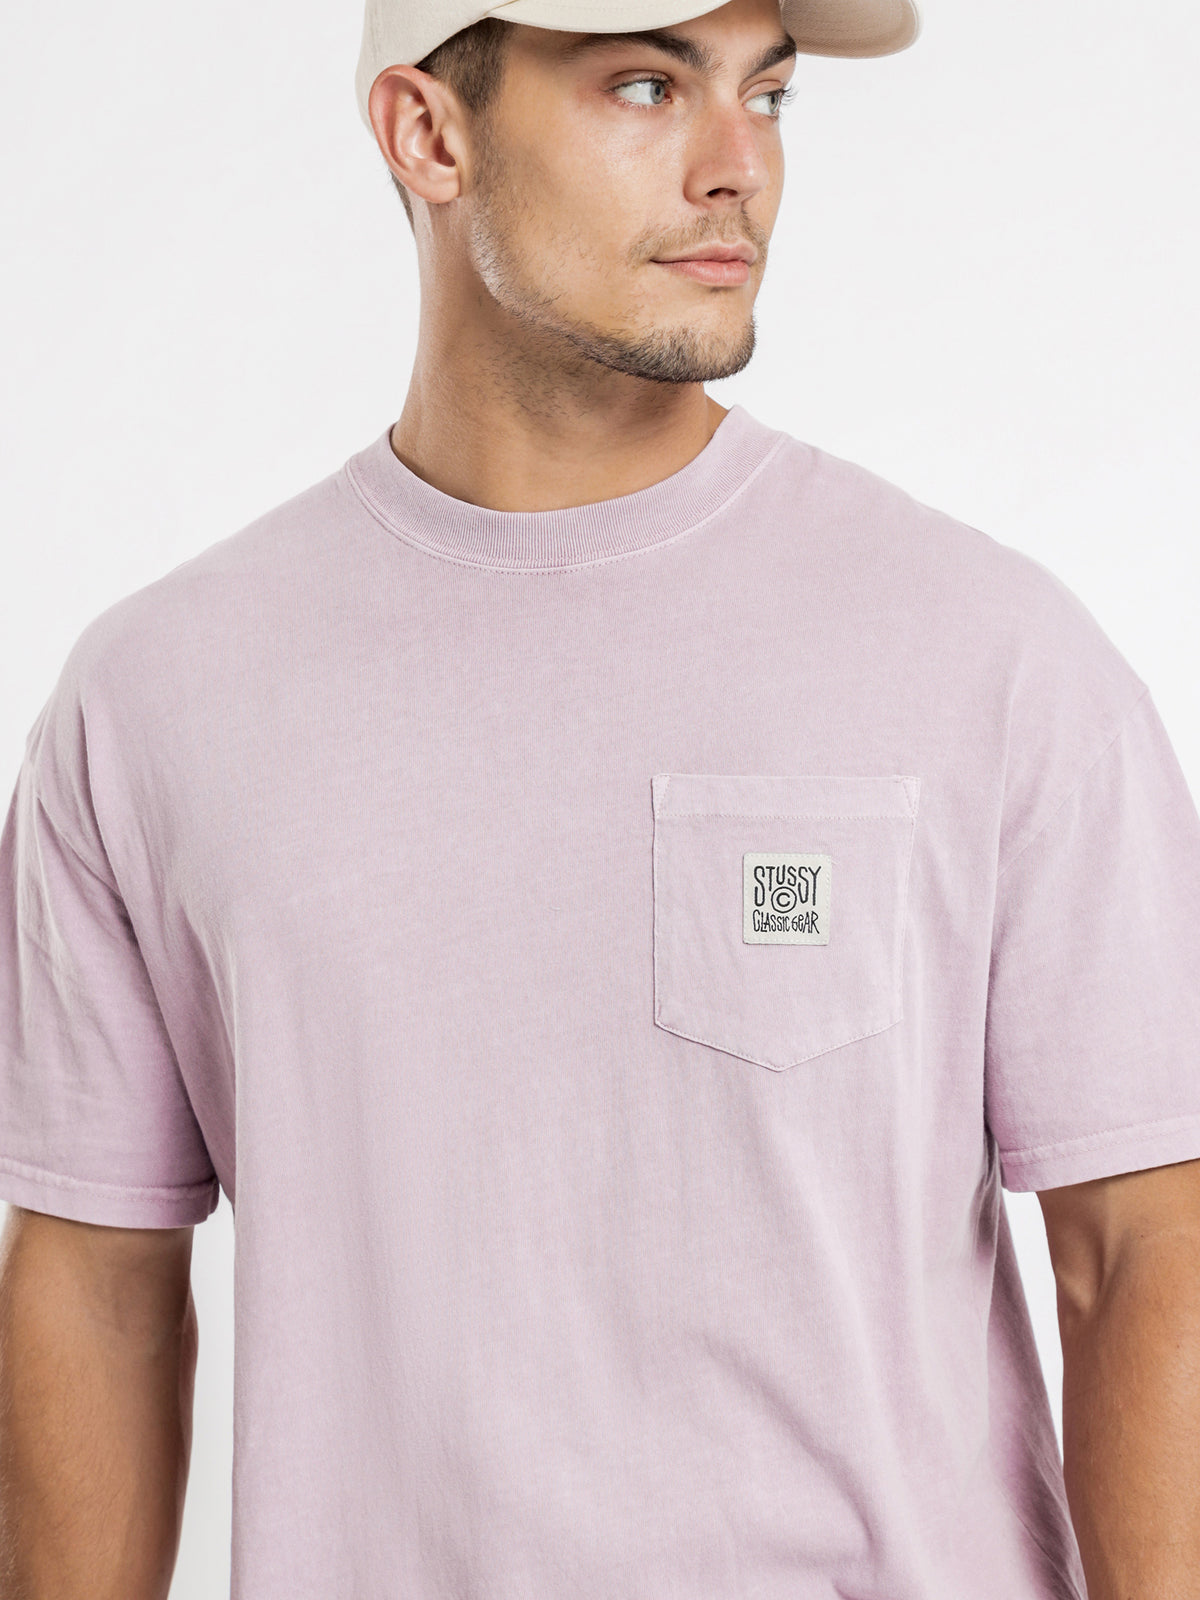 Classic Gear Pocket T-Shirt in Pigment Mauve